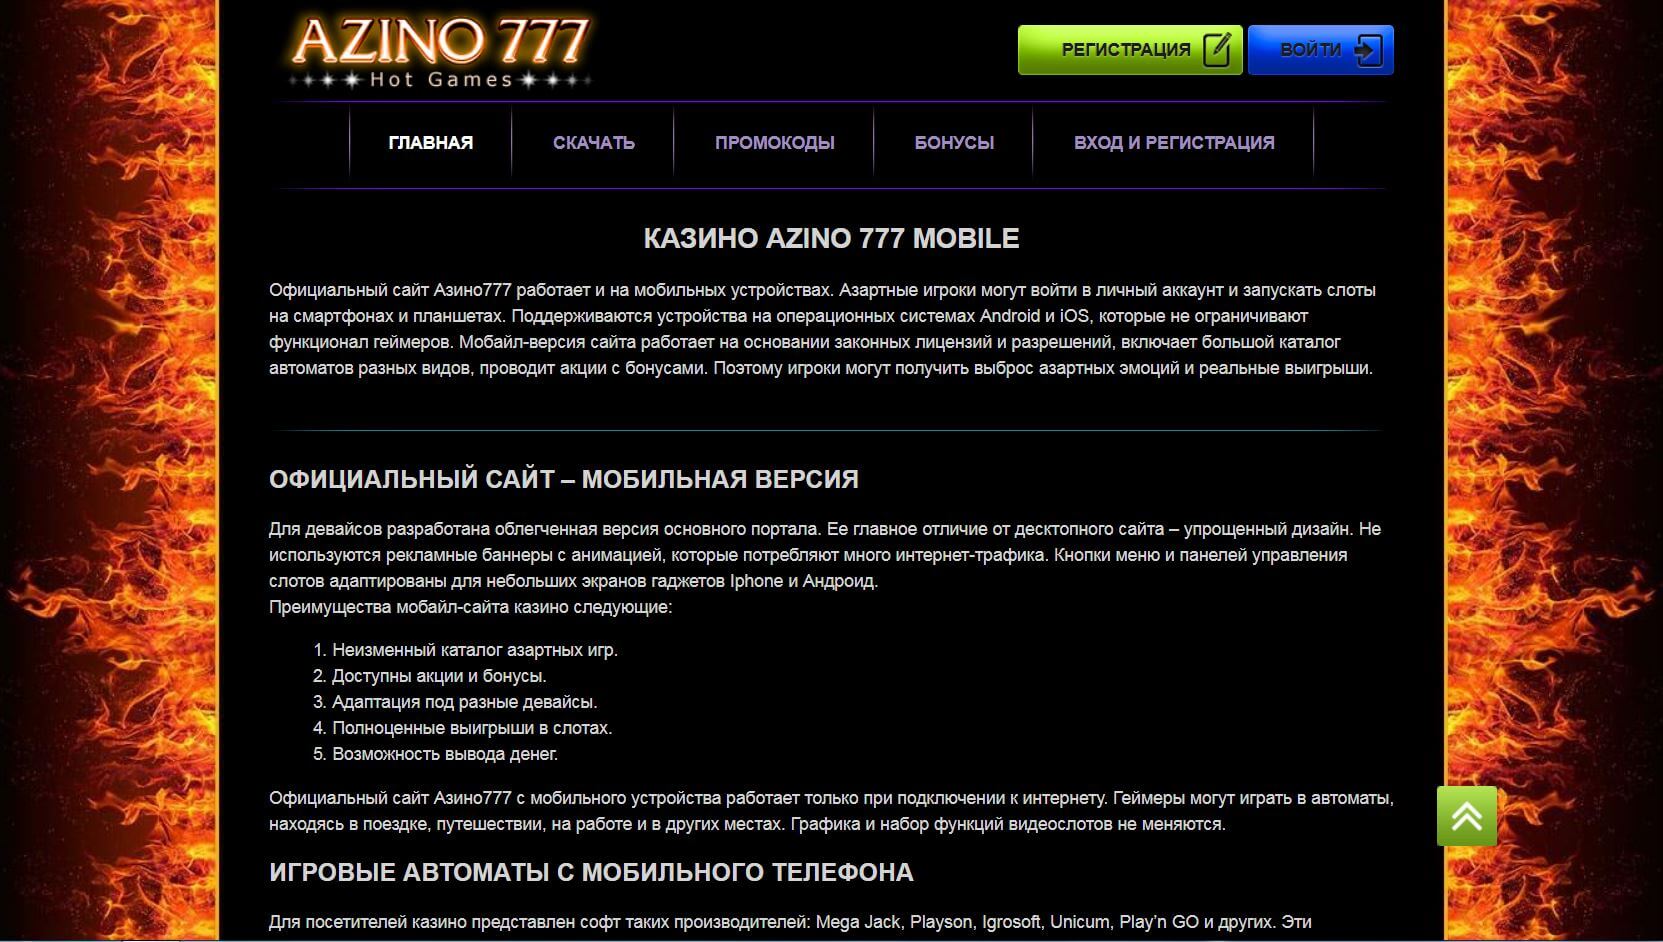 Азино777 сайт зеркало azino777 slots now com. Азино777 вывод денег.